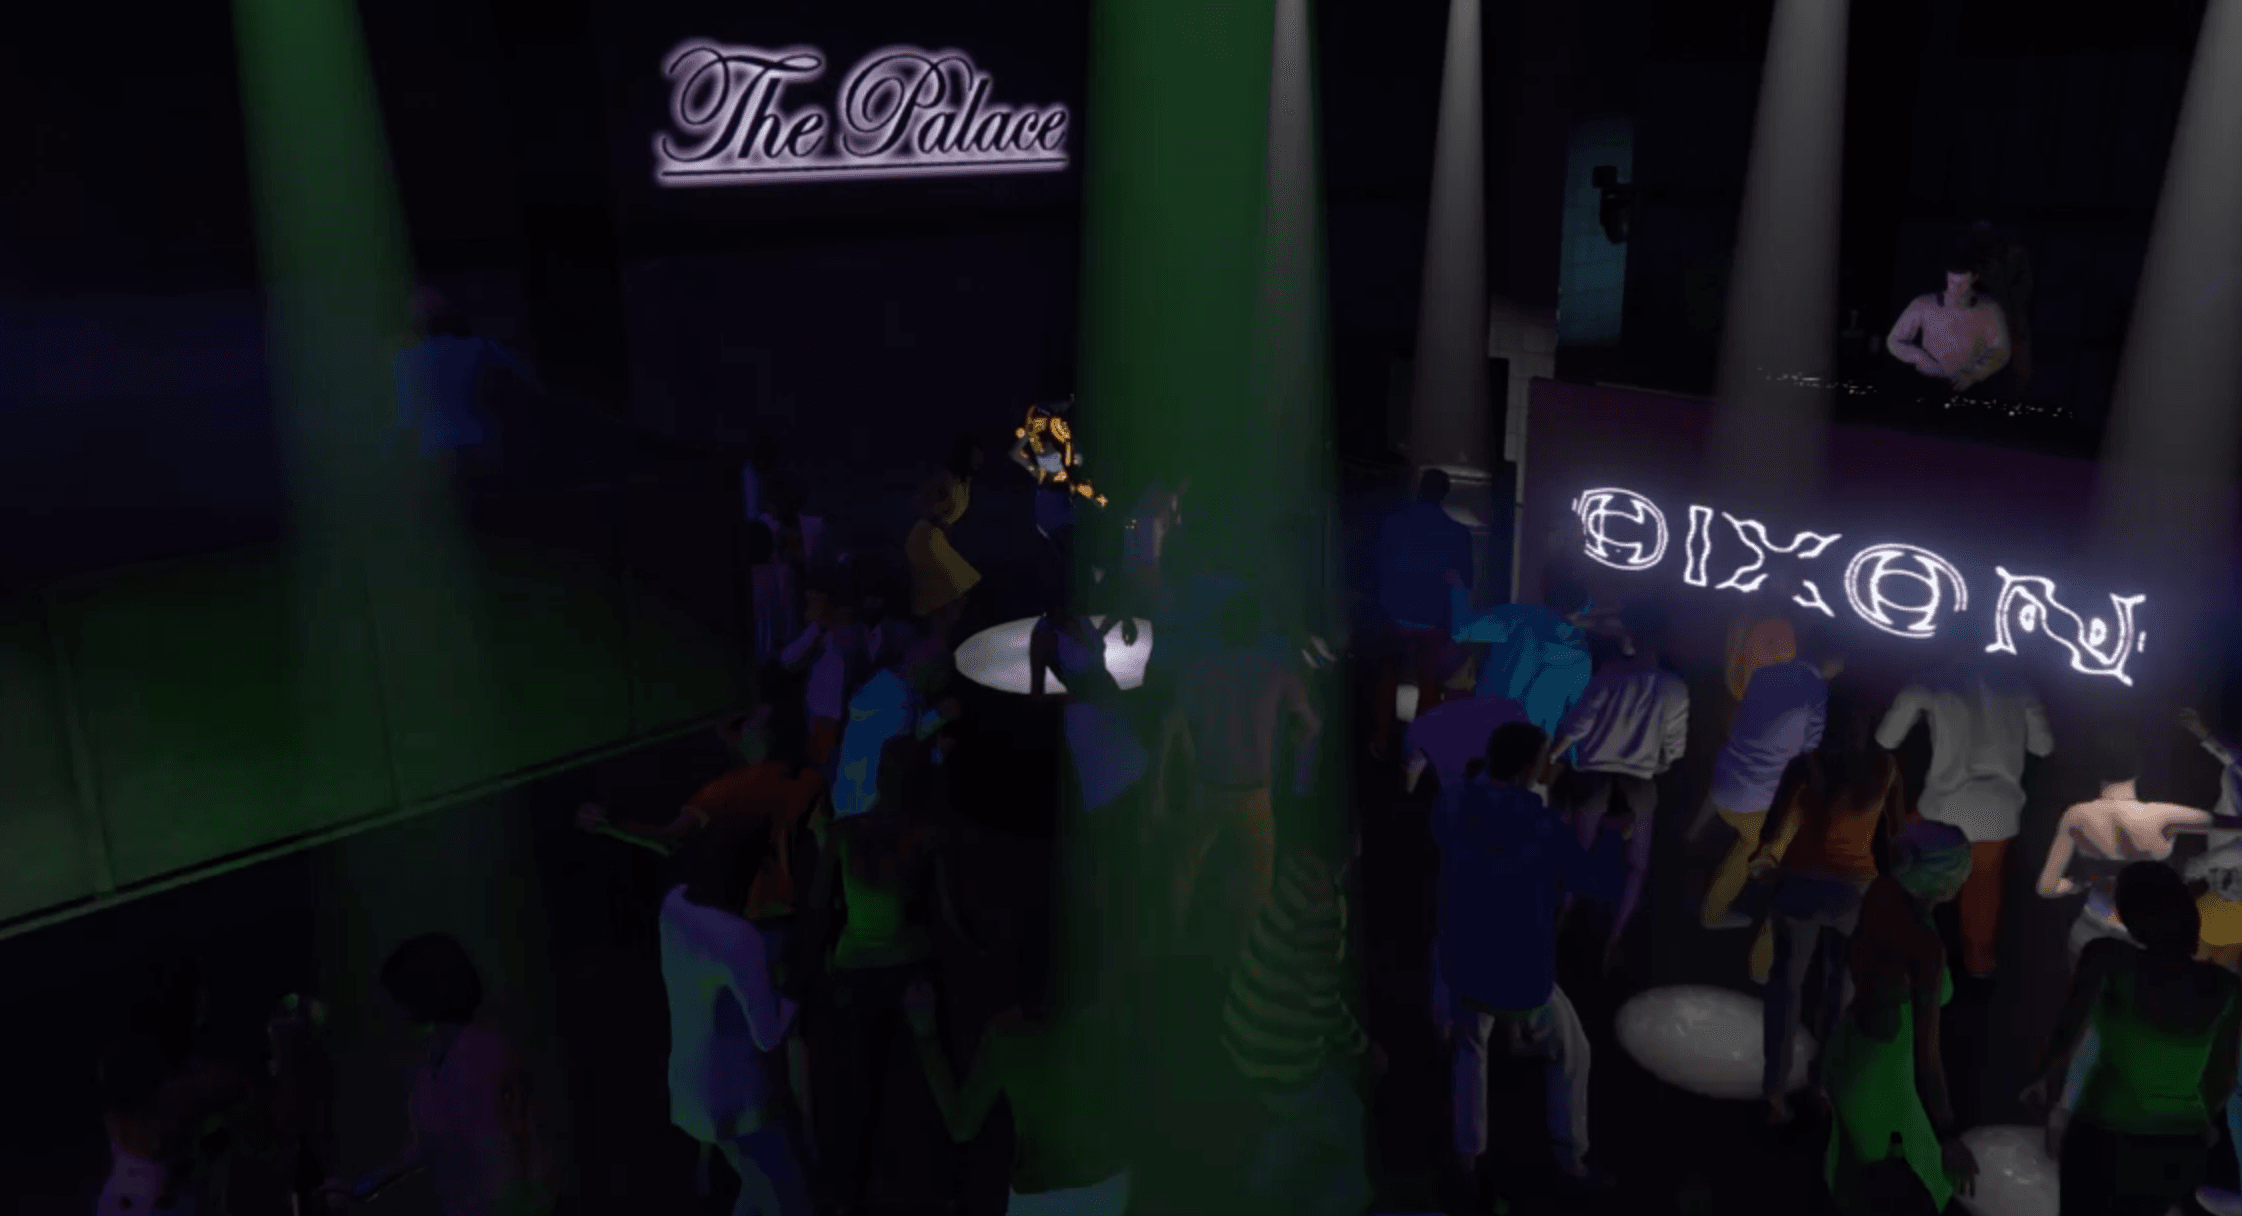 customers having fun dancing in the palace nightclub under a rain of green lights